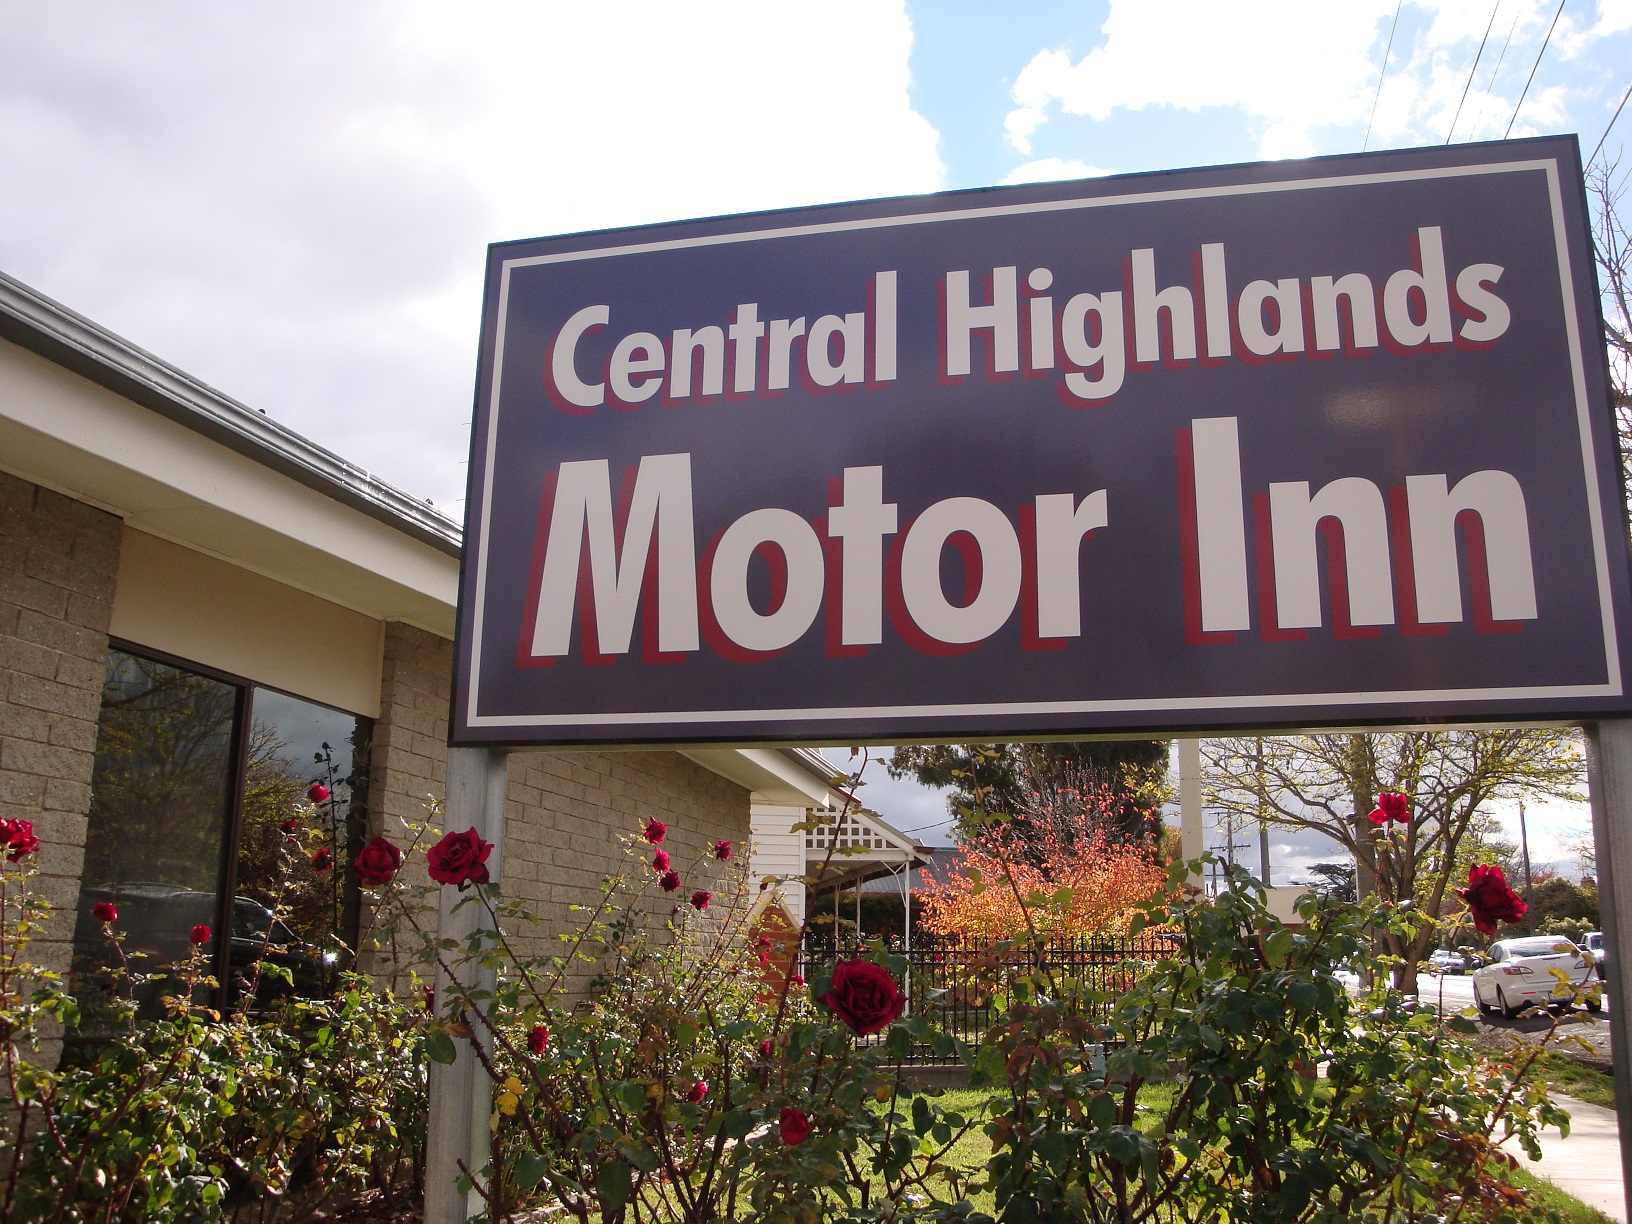 Central Highlands Motor Inn - Stayed